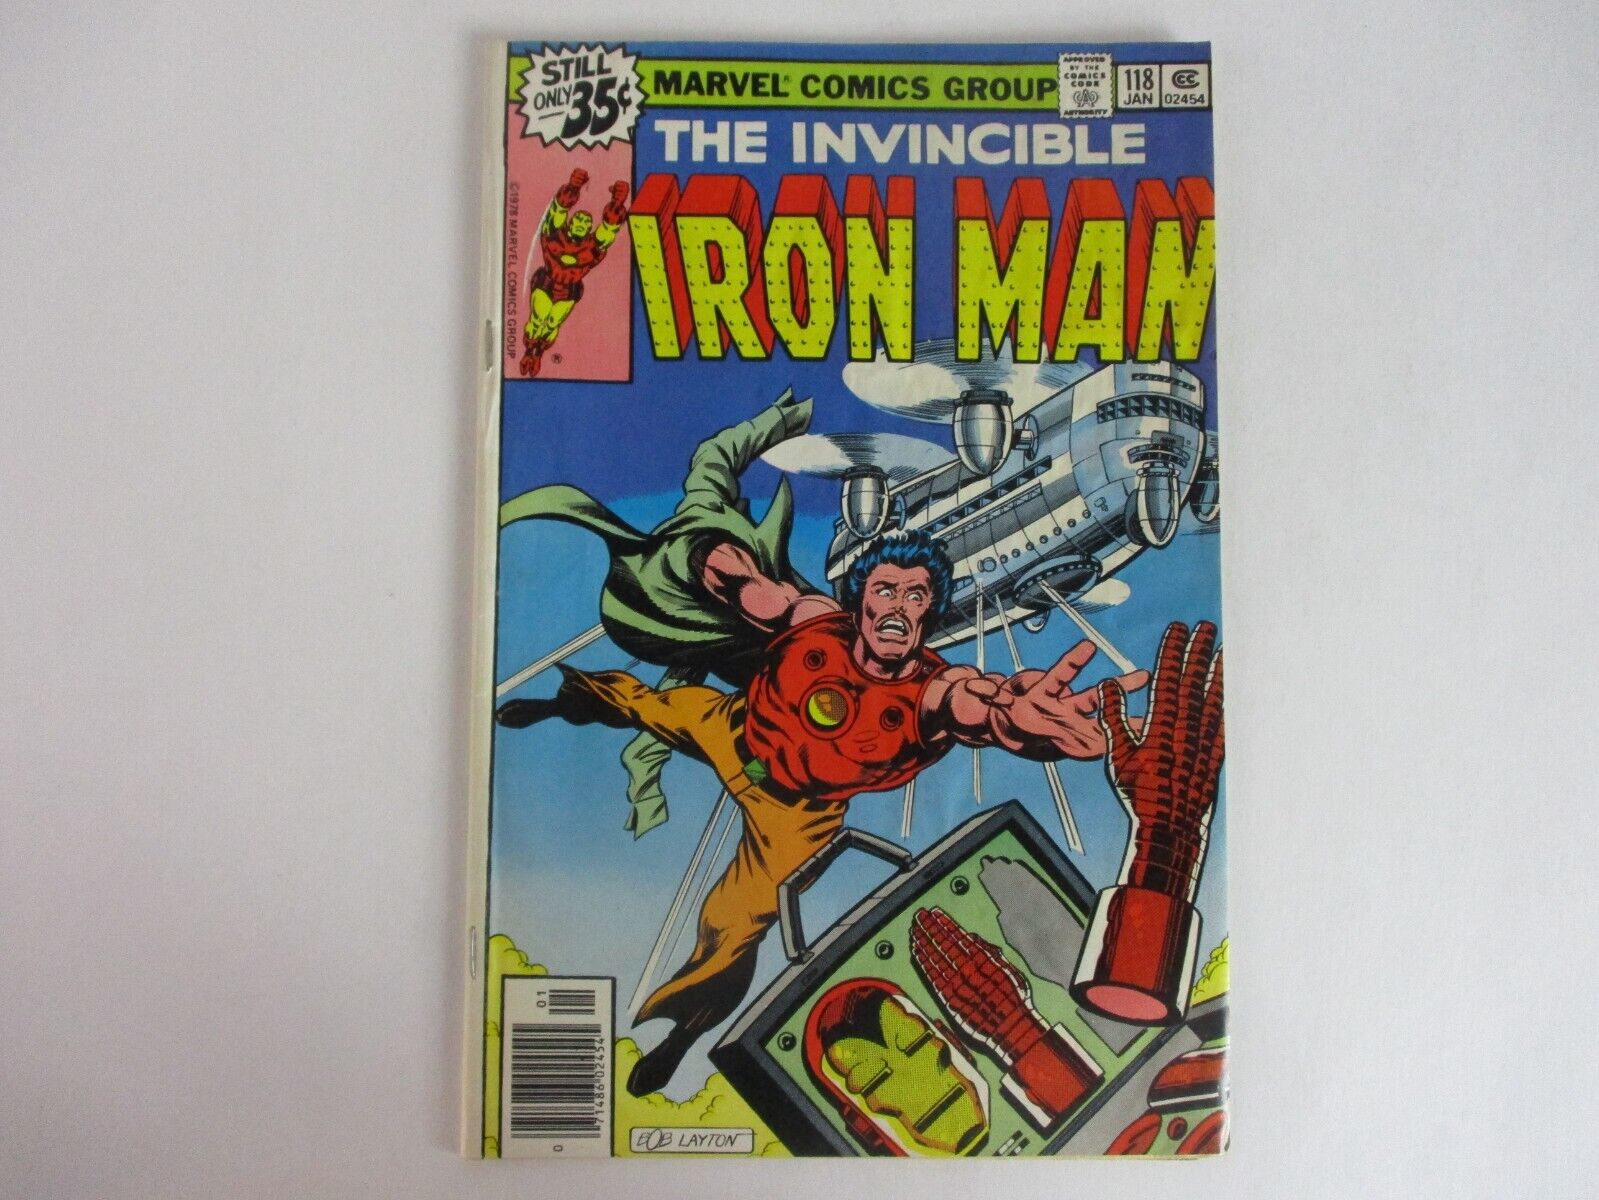 Marvel Comics THE INVINCIBLE IRON MAN #118 January 1979 VERY NICE